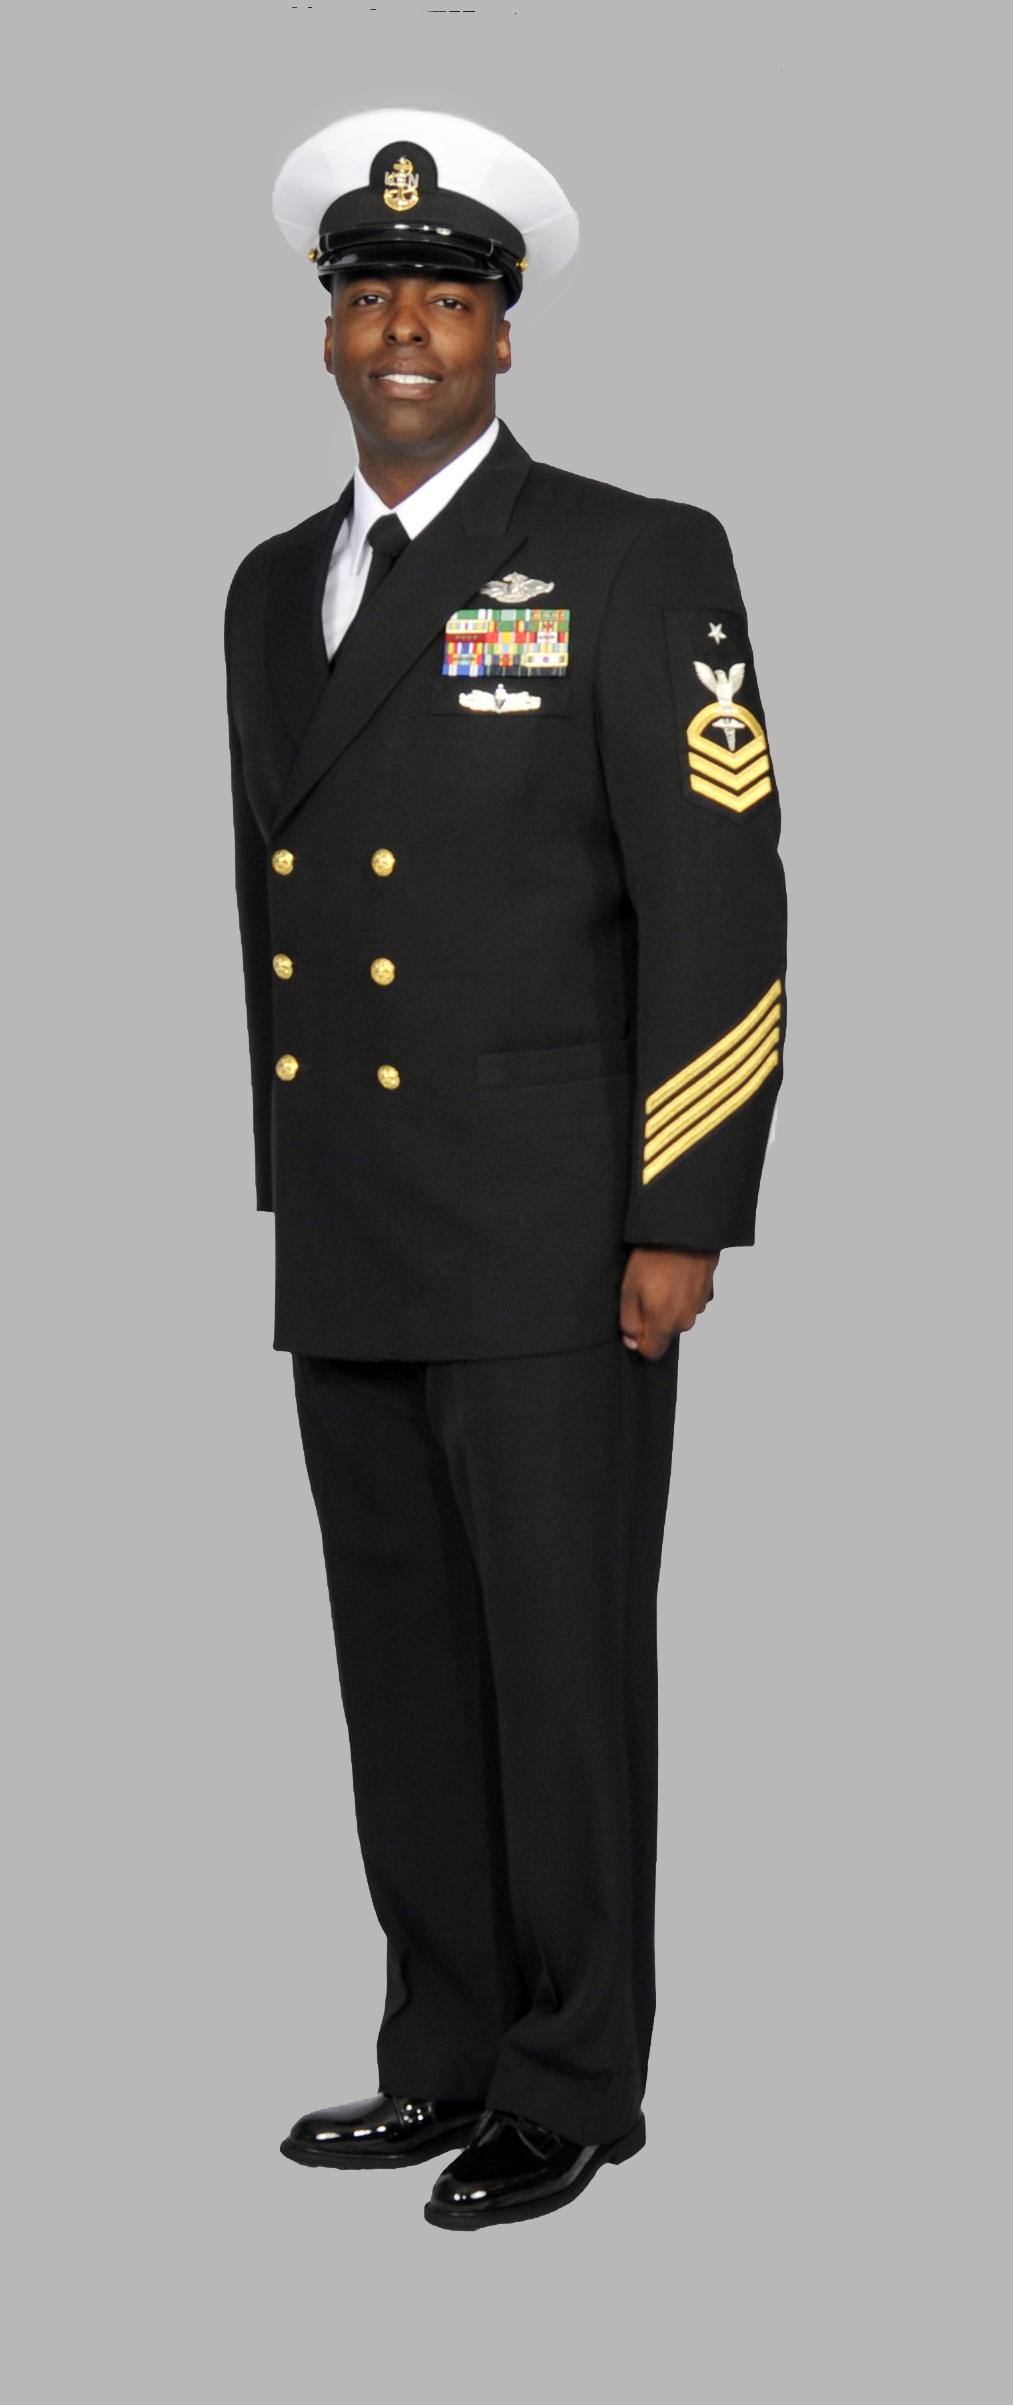 Navy Chief Dress blues